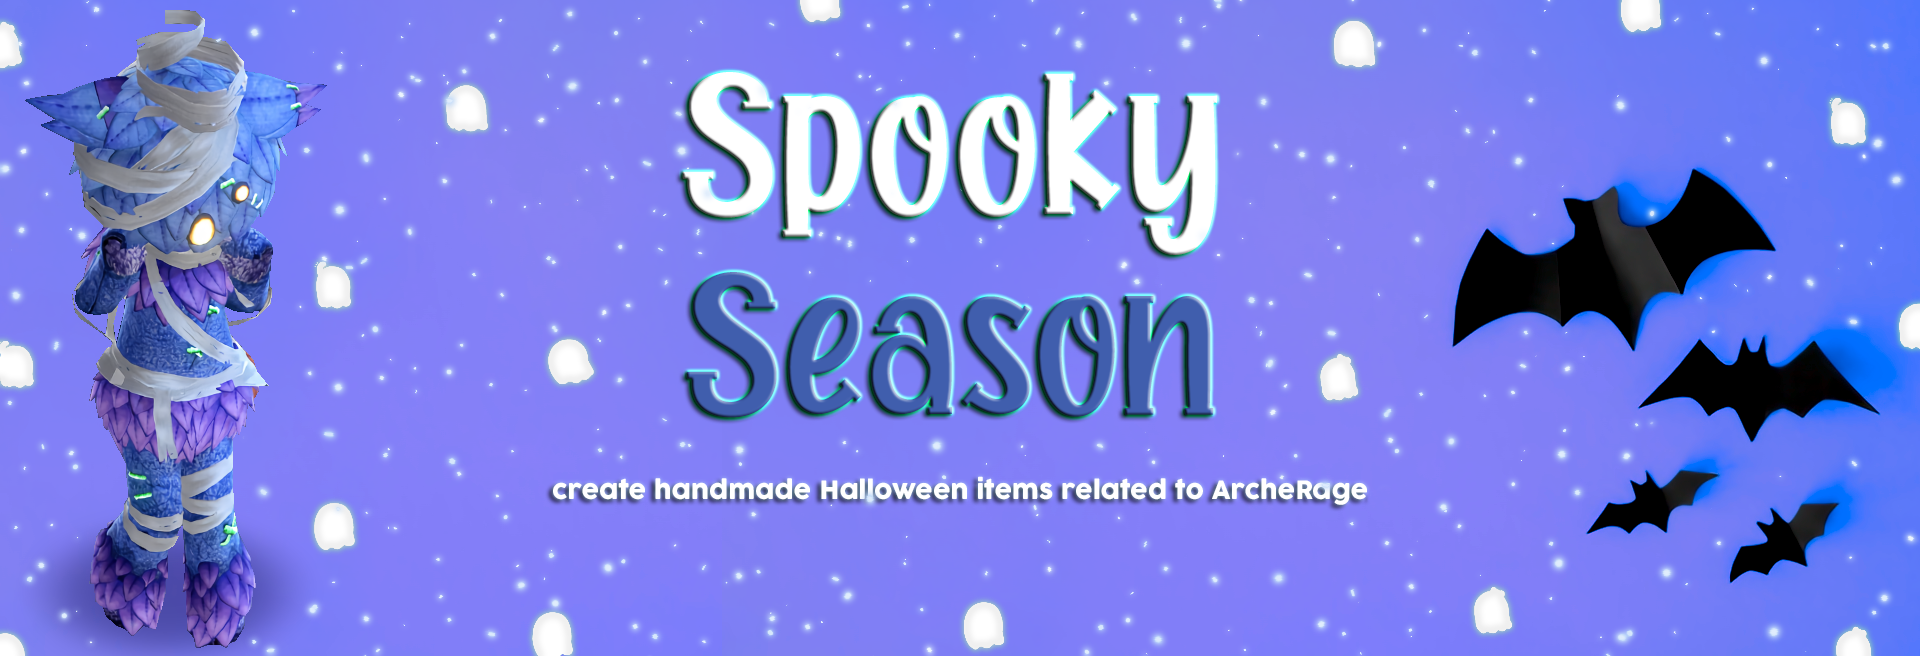 Spooky_Season.png